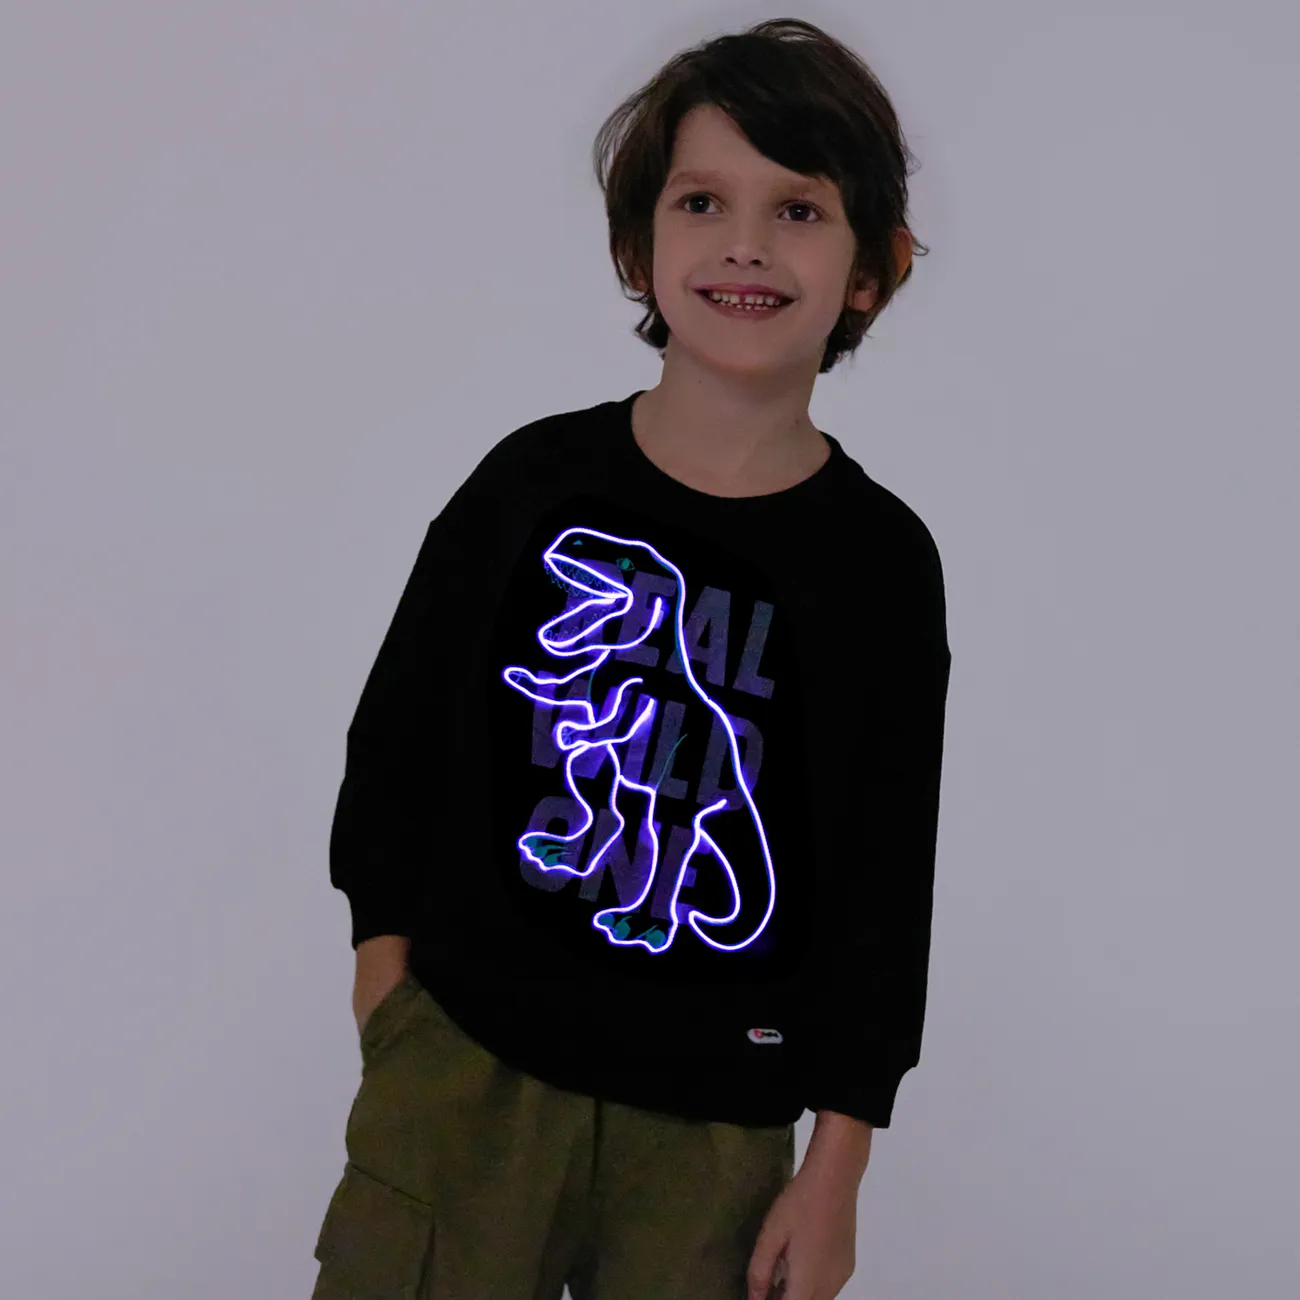 Go-Glow Illuminating Sweatshirt with Light Up Dinosaur Pattern Including Controller (Built-In Battery) Black big image 1